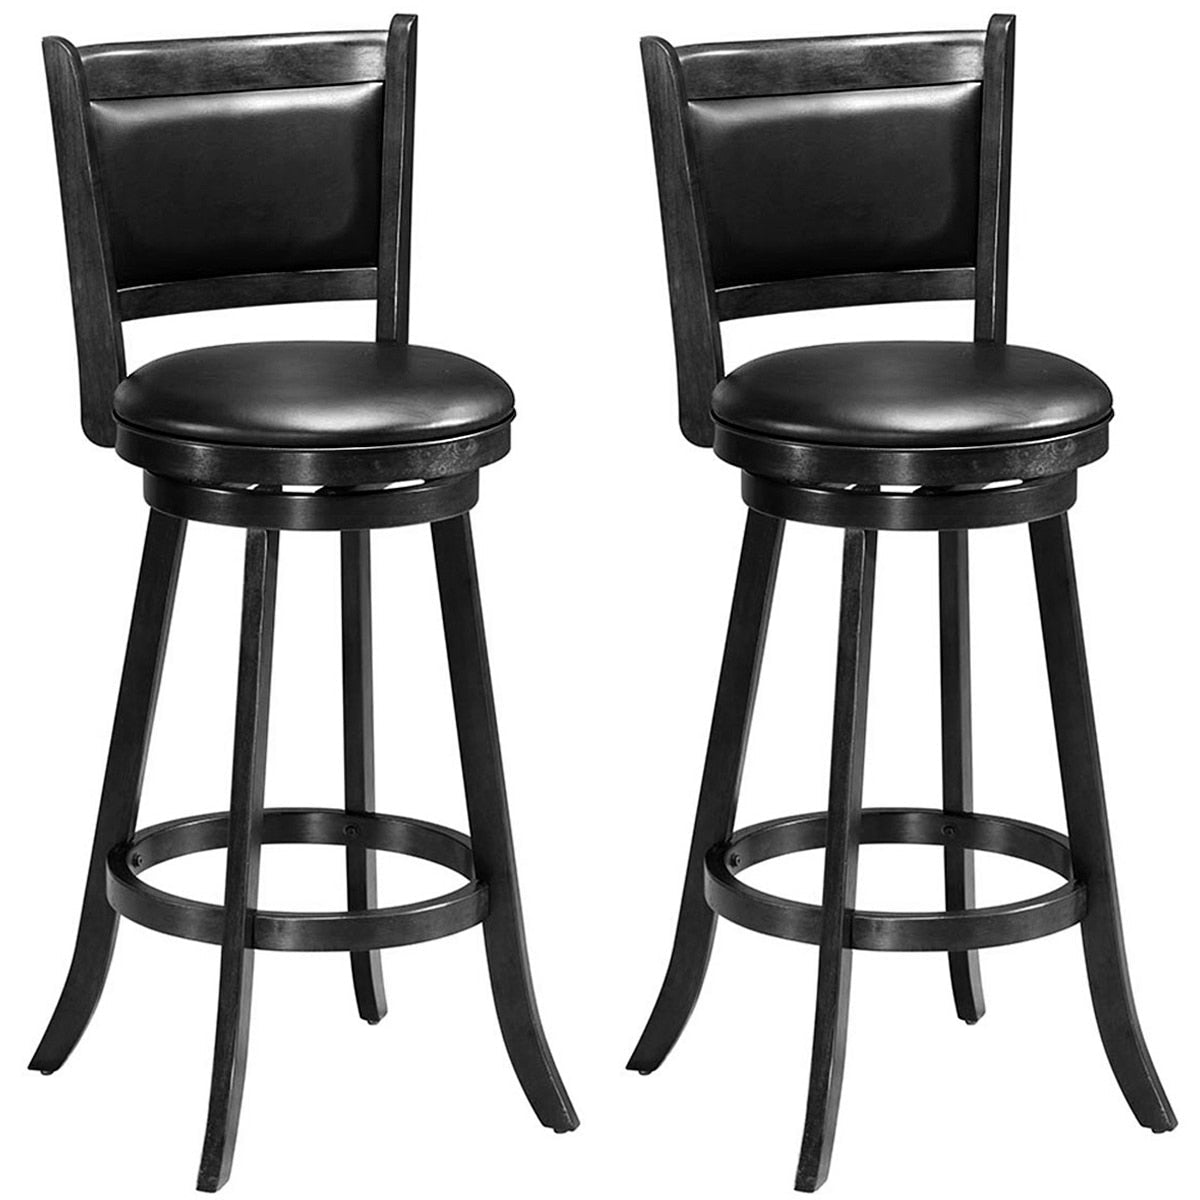 Swivel Bar Height Stool Wood Dining Chair Barstool Black Set of 2 - 29[US-Stock]